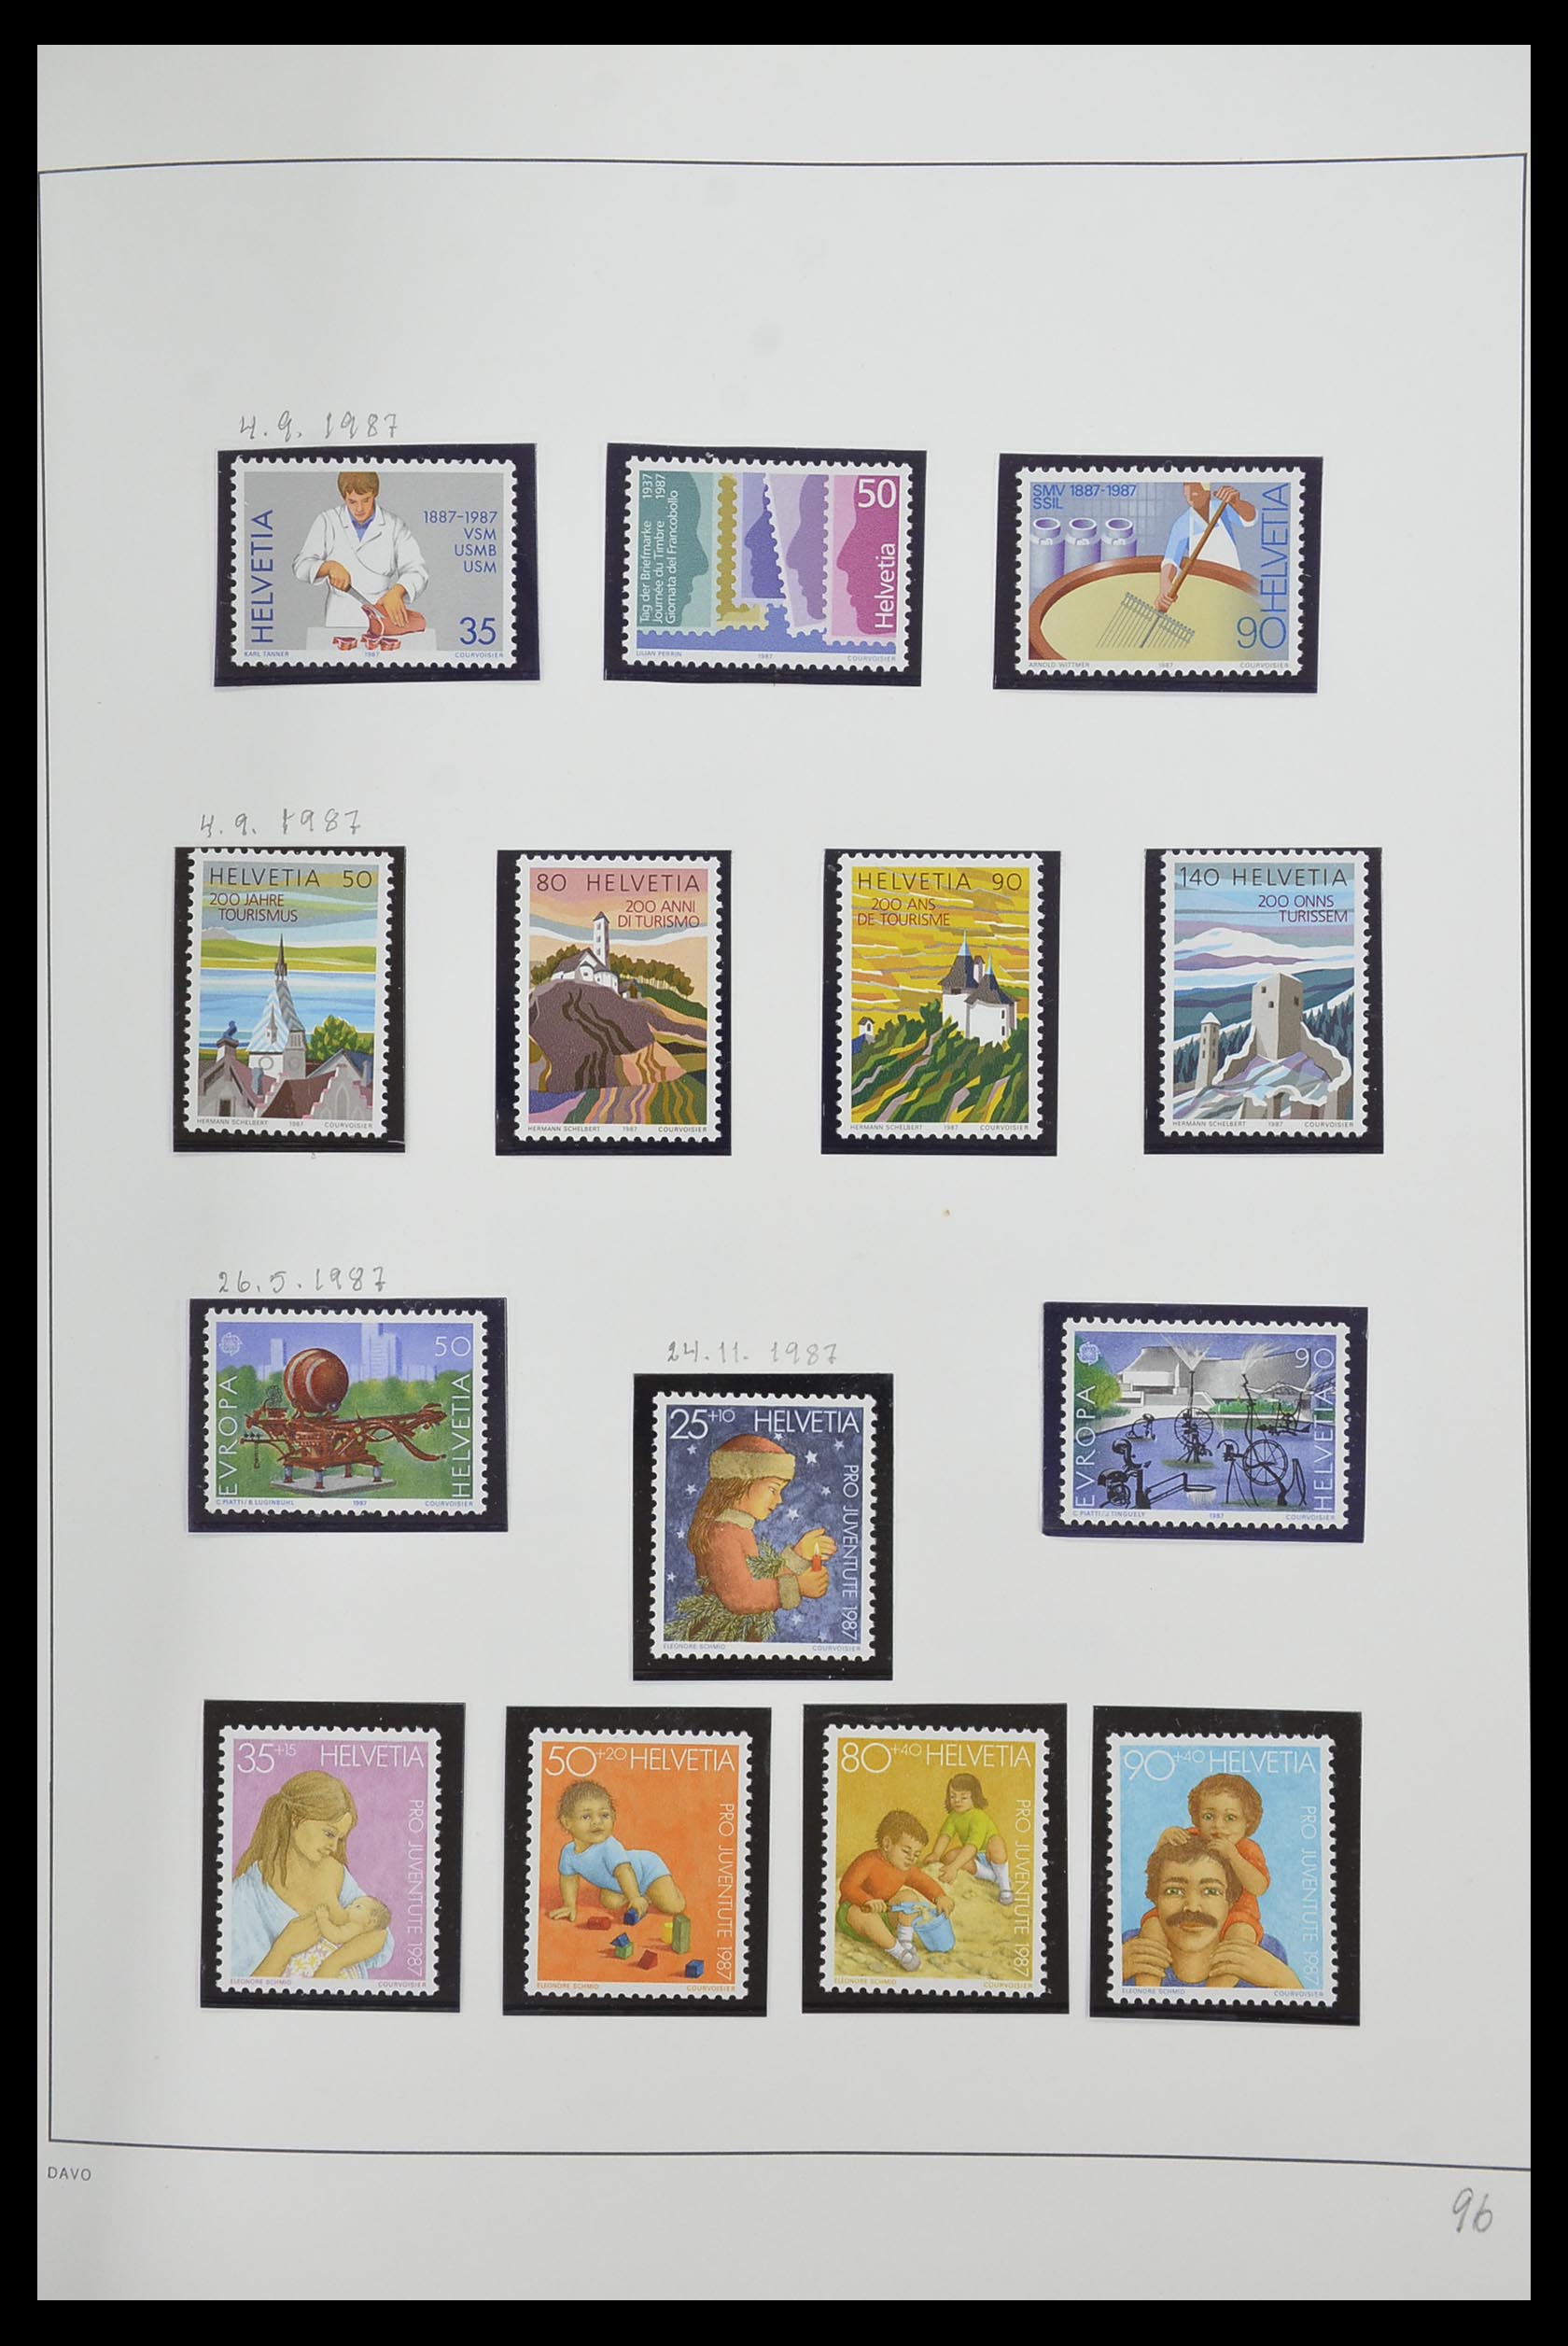 33556 098 - Stamp collection 33556 Switzerland 1862-2000.